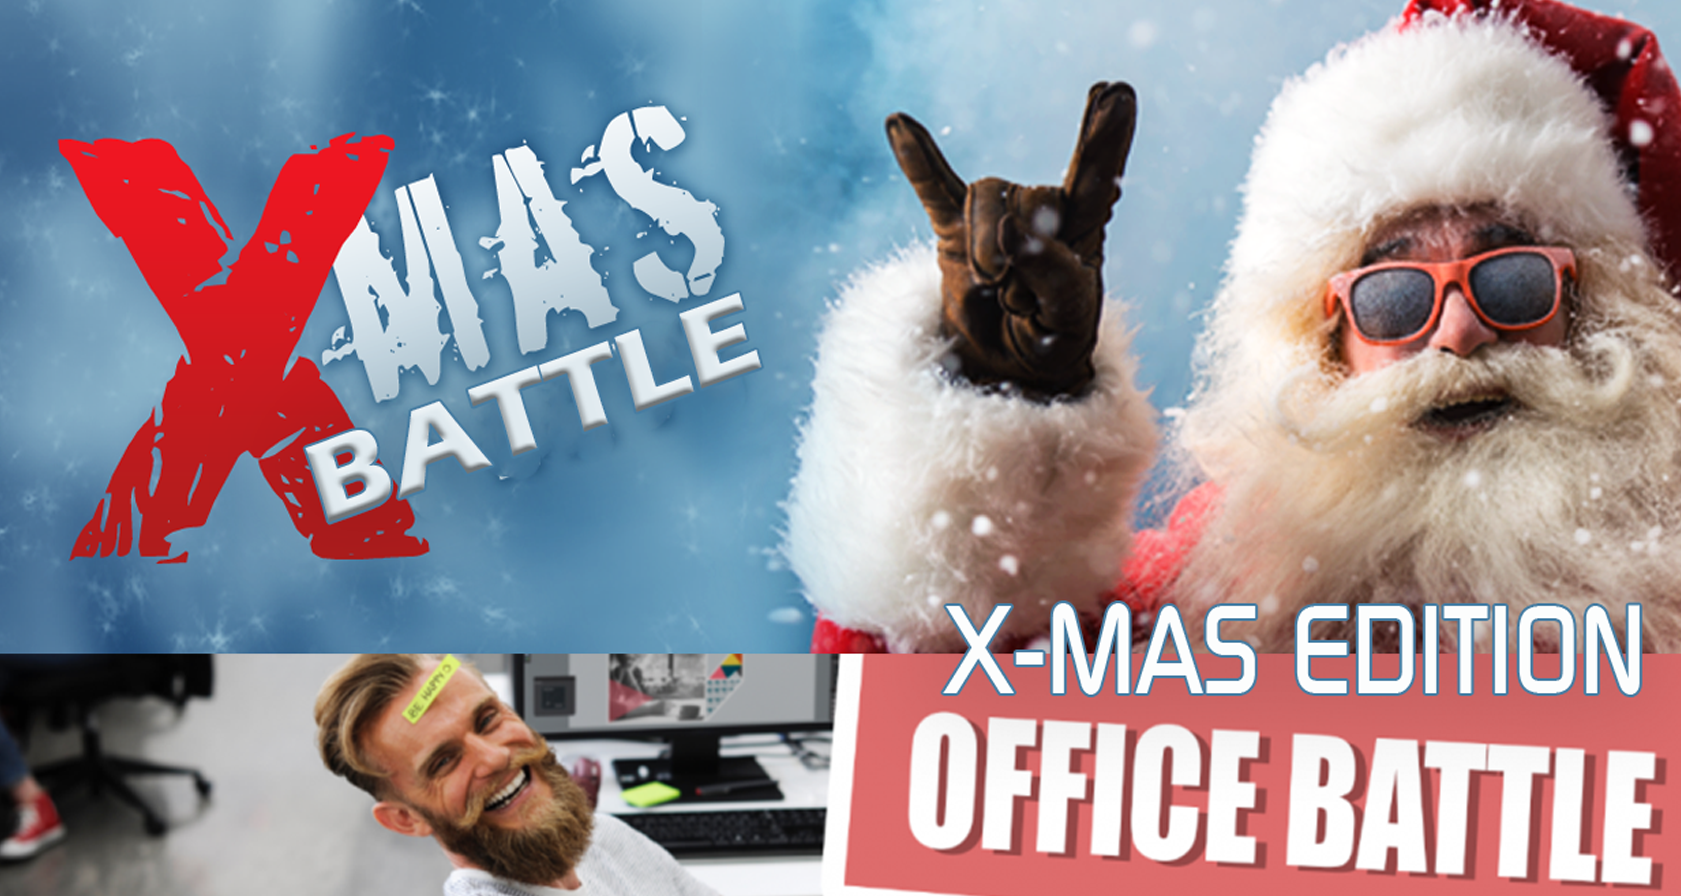 Teamuitje: X-mas Office battle